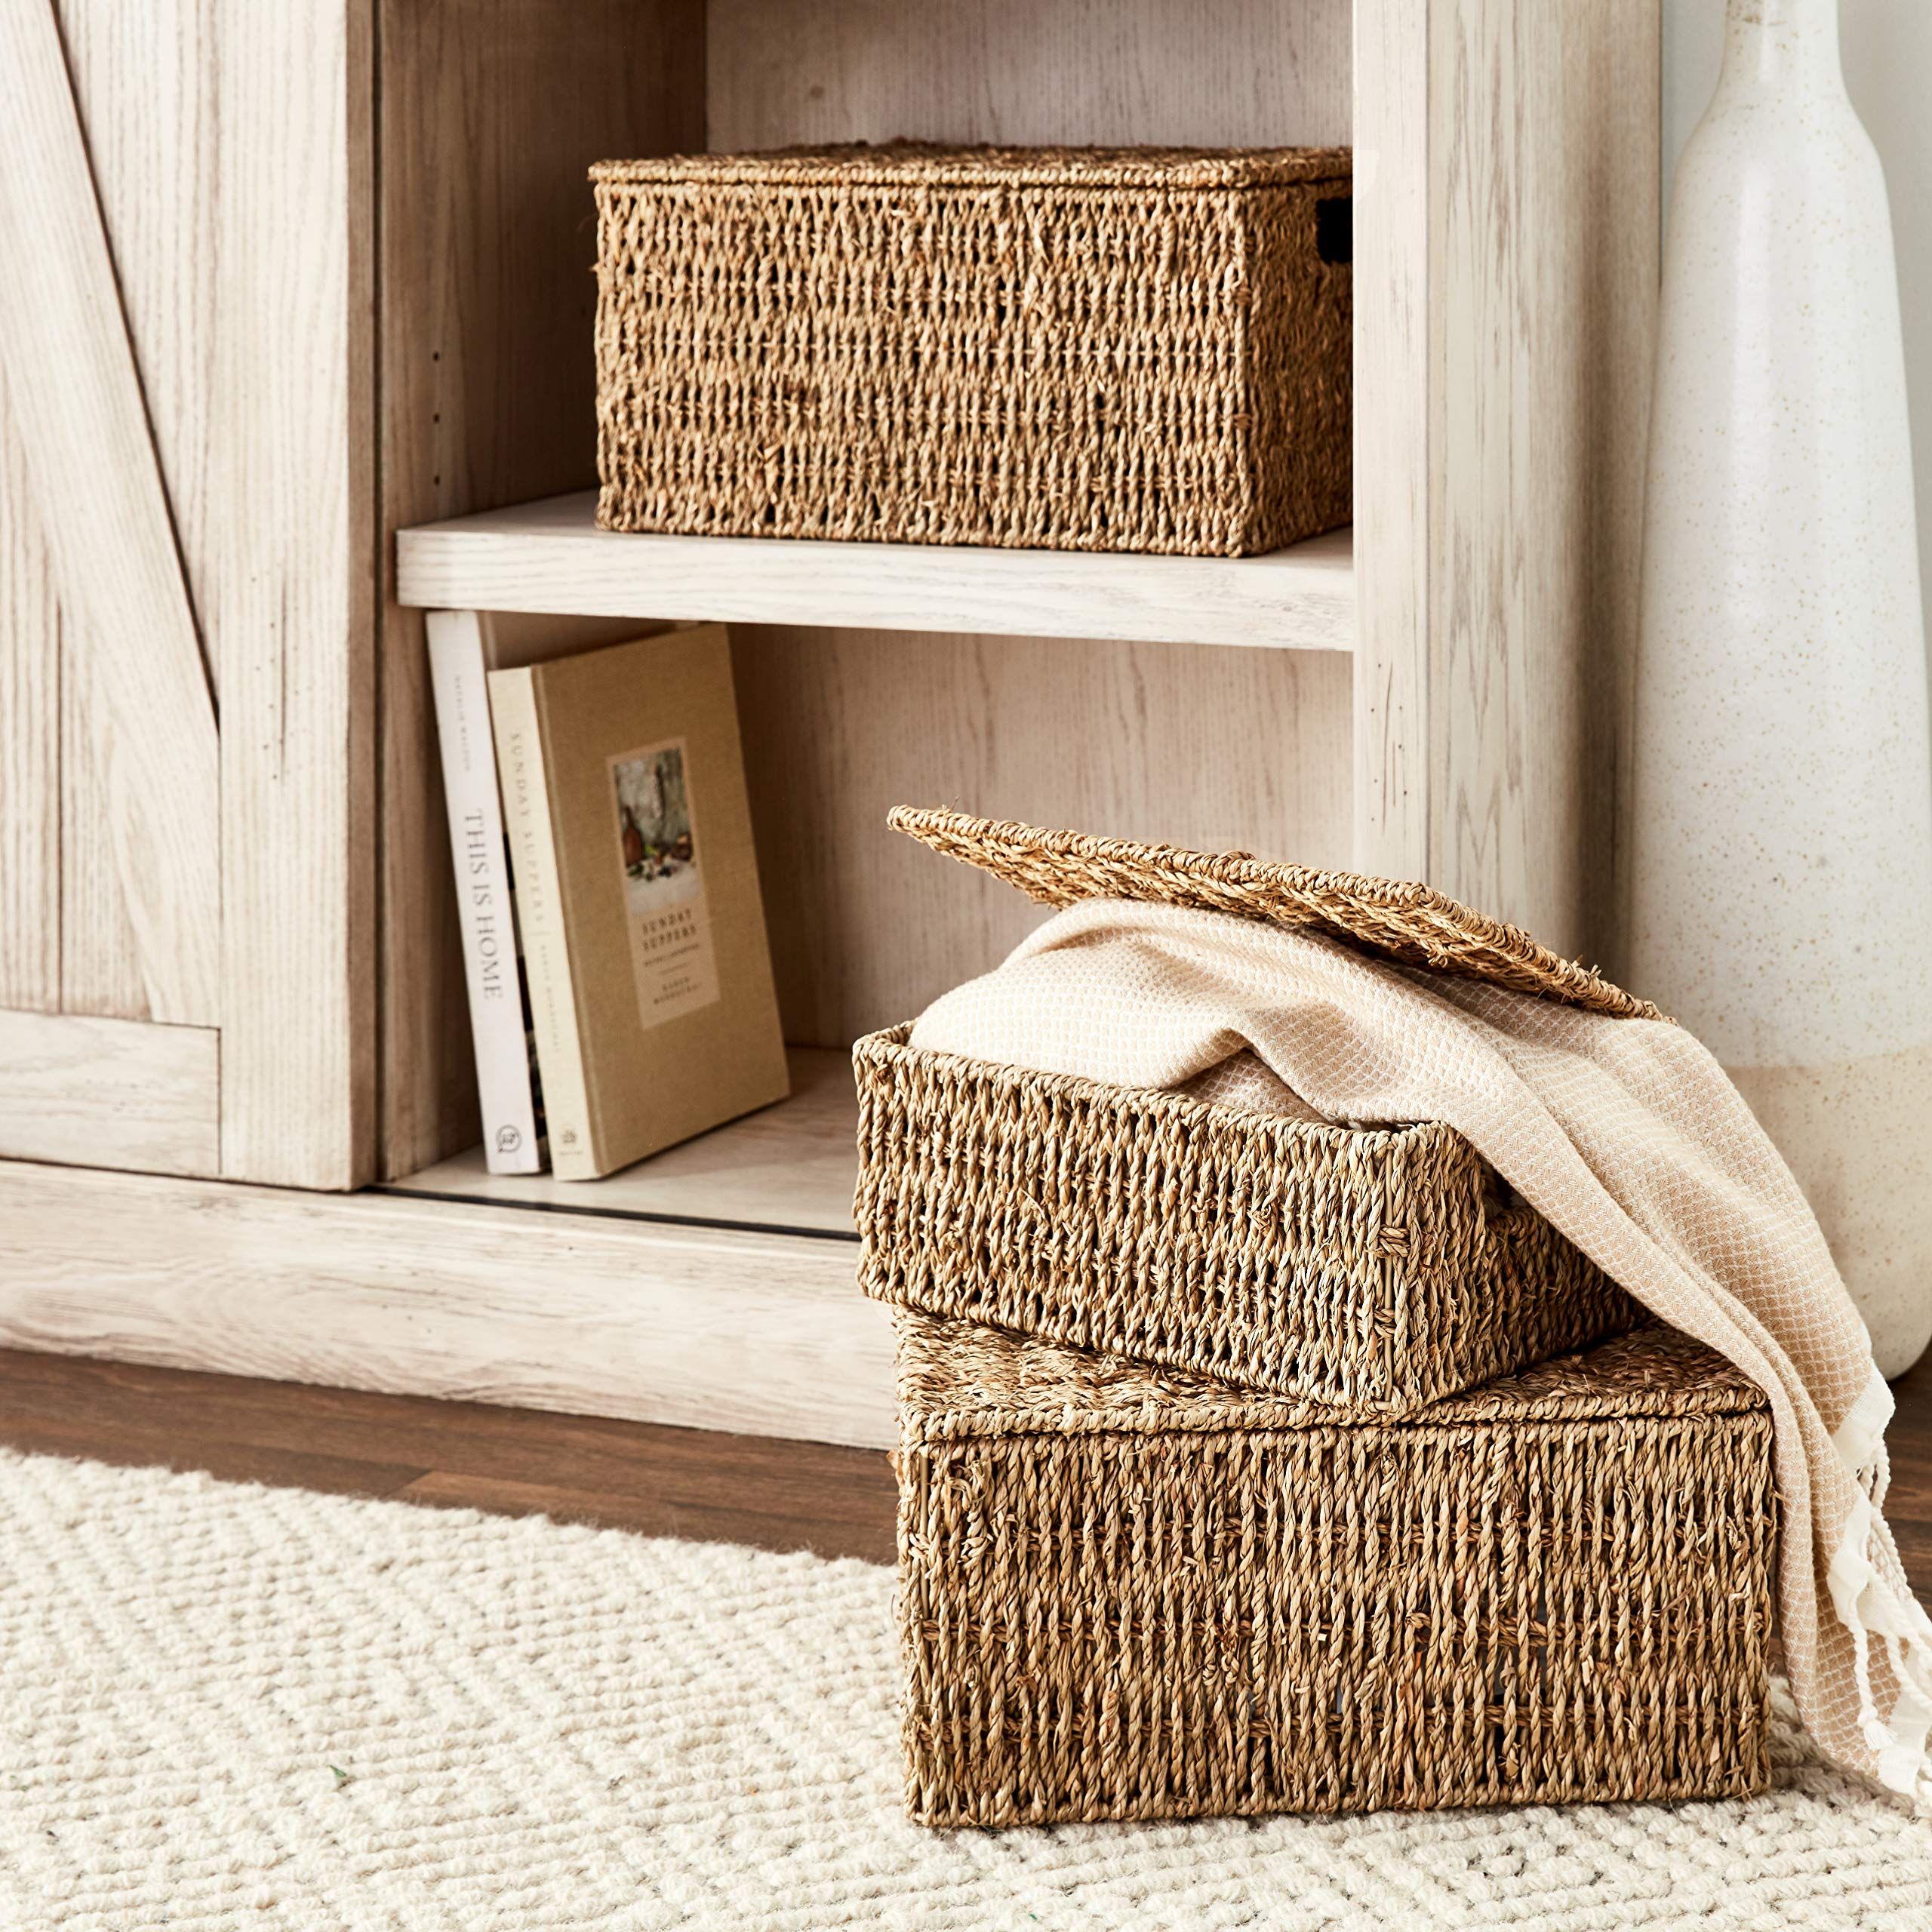 Trademark Innovations Rectangular Seagrass Baskets Lids (Set of 3), Brown | Amazon (US)